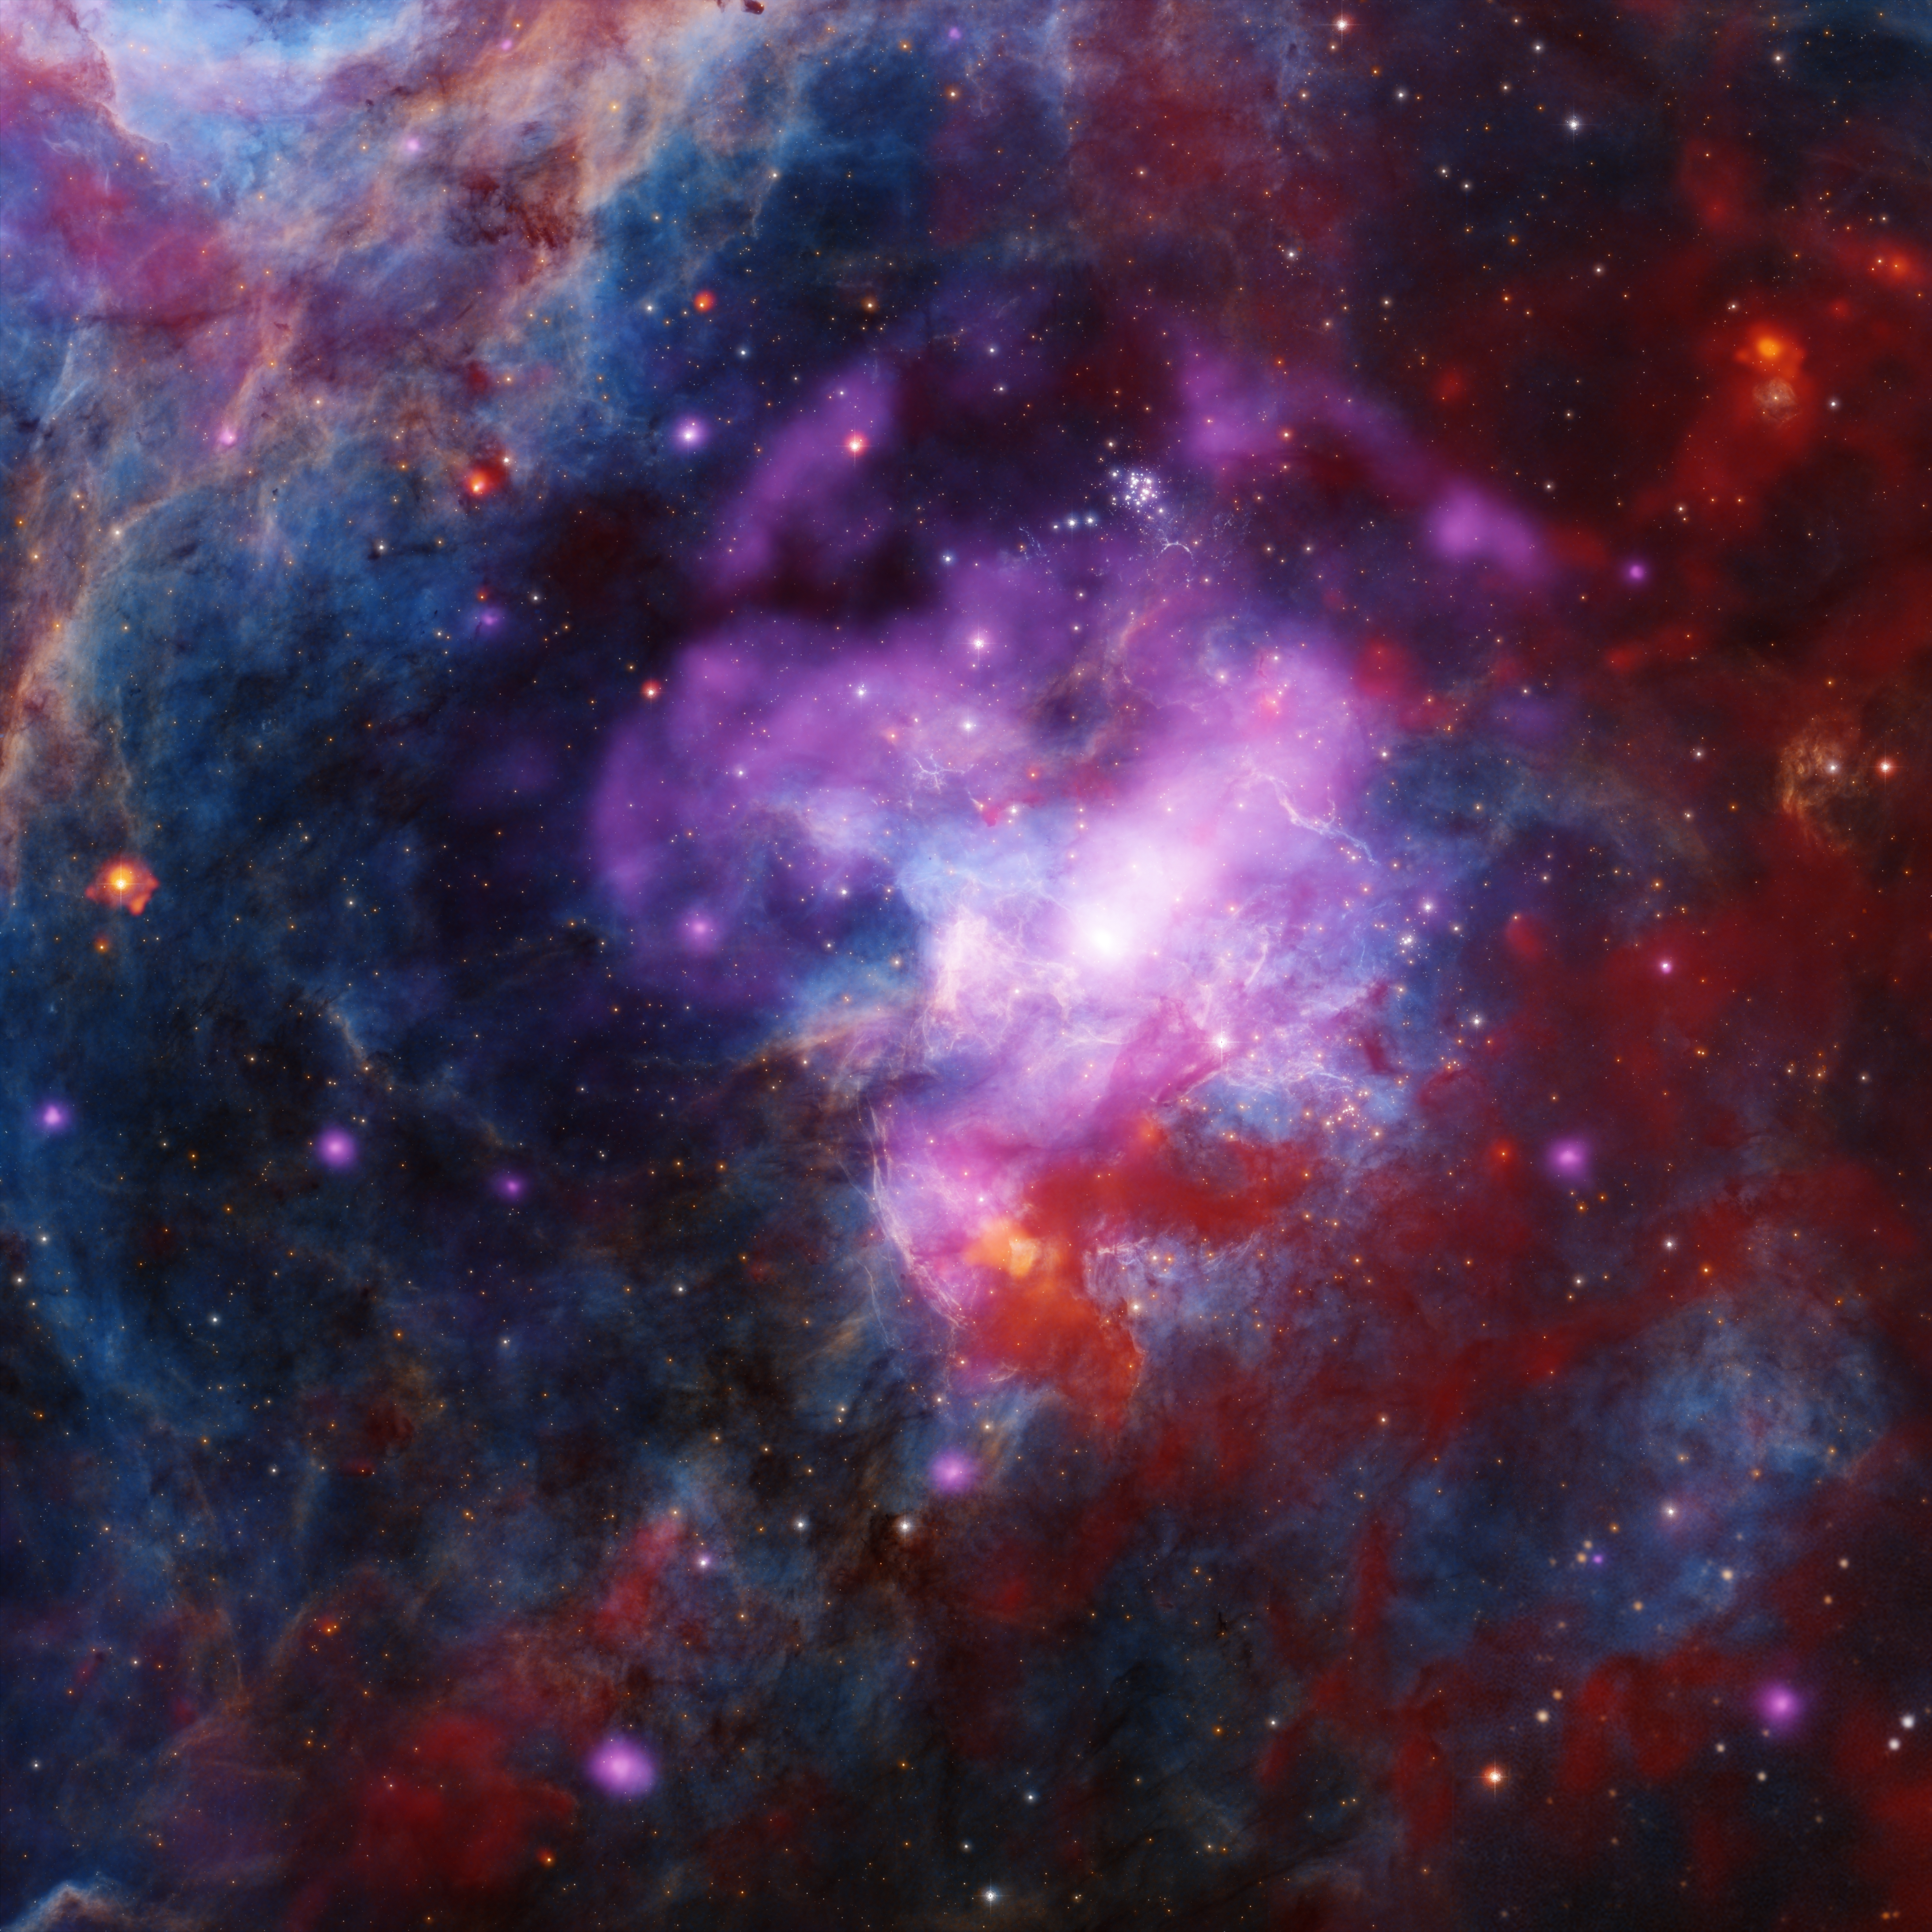 30 Doradus B: NASA Telescopes Start the Year With a Double Bang